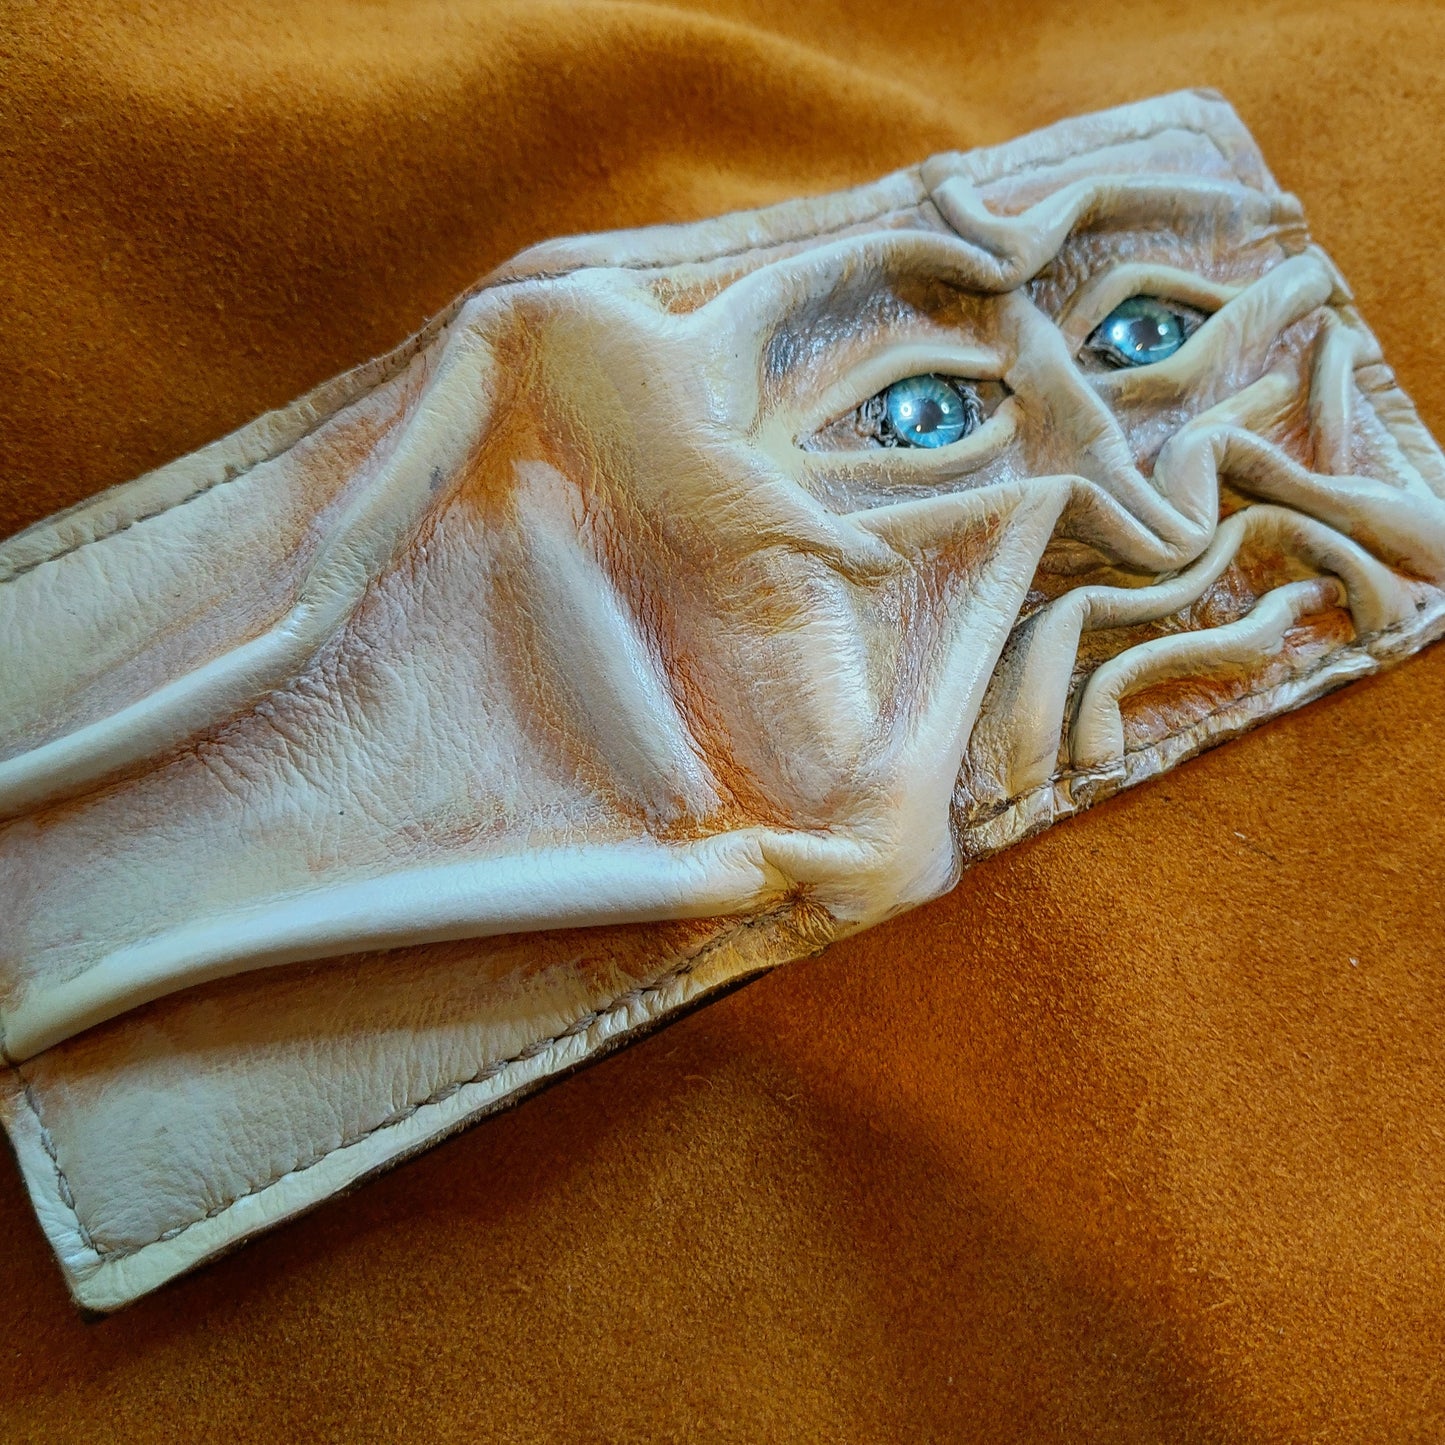 Gnome King - Necromonicon - Oz - demon eyes - monster face - Leather wallet.